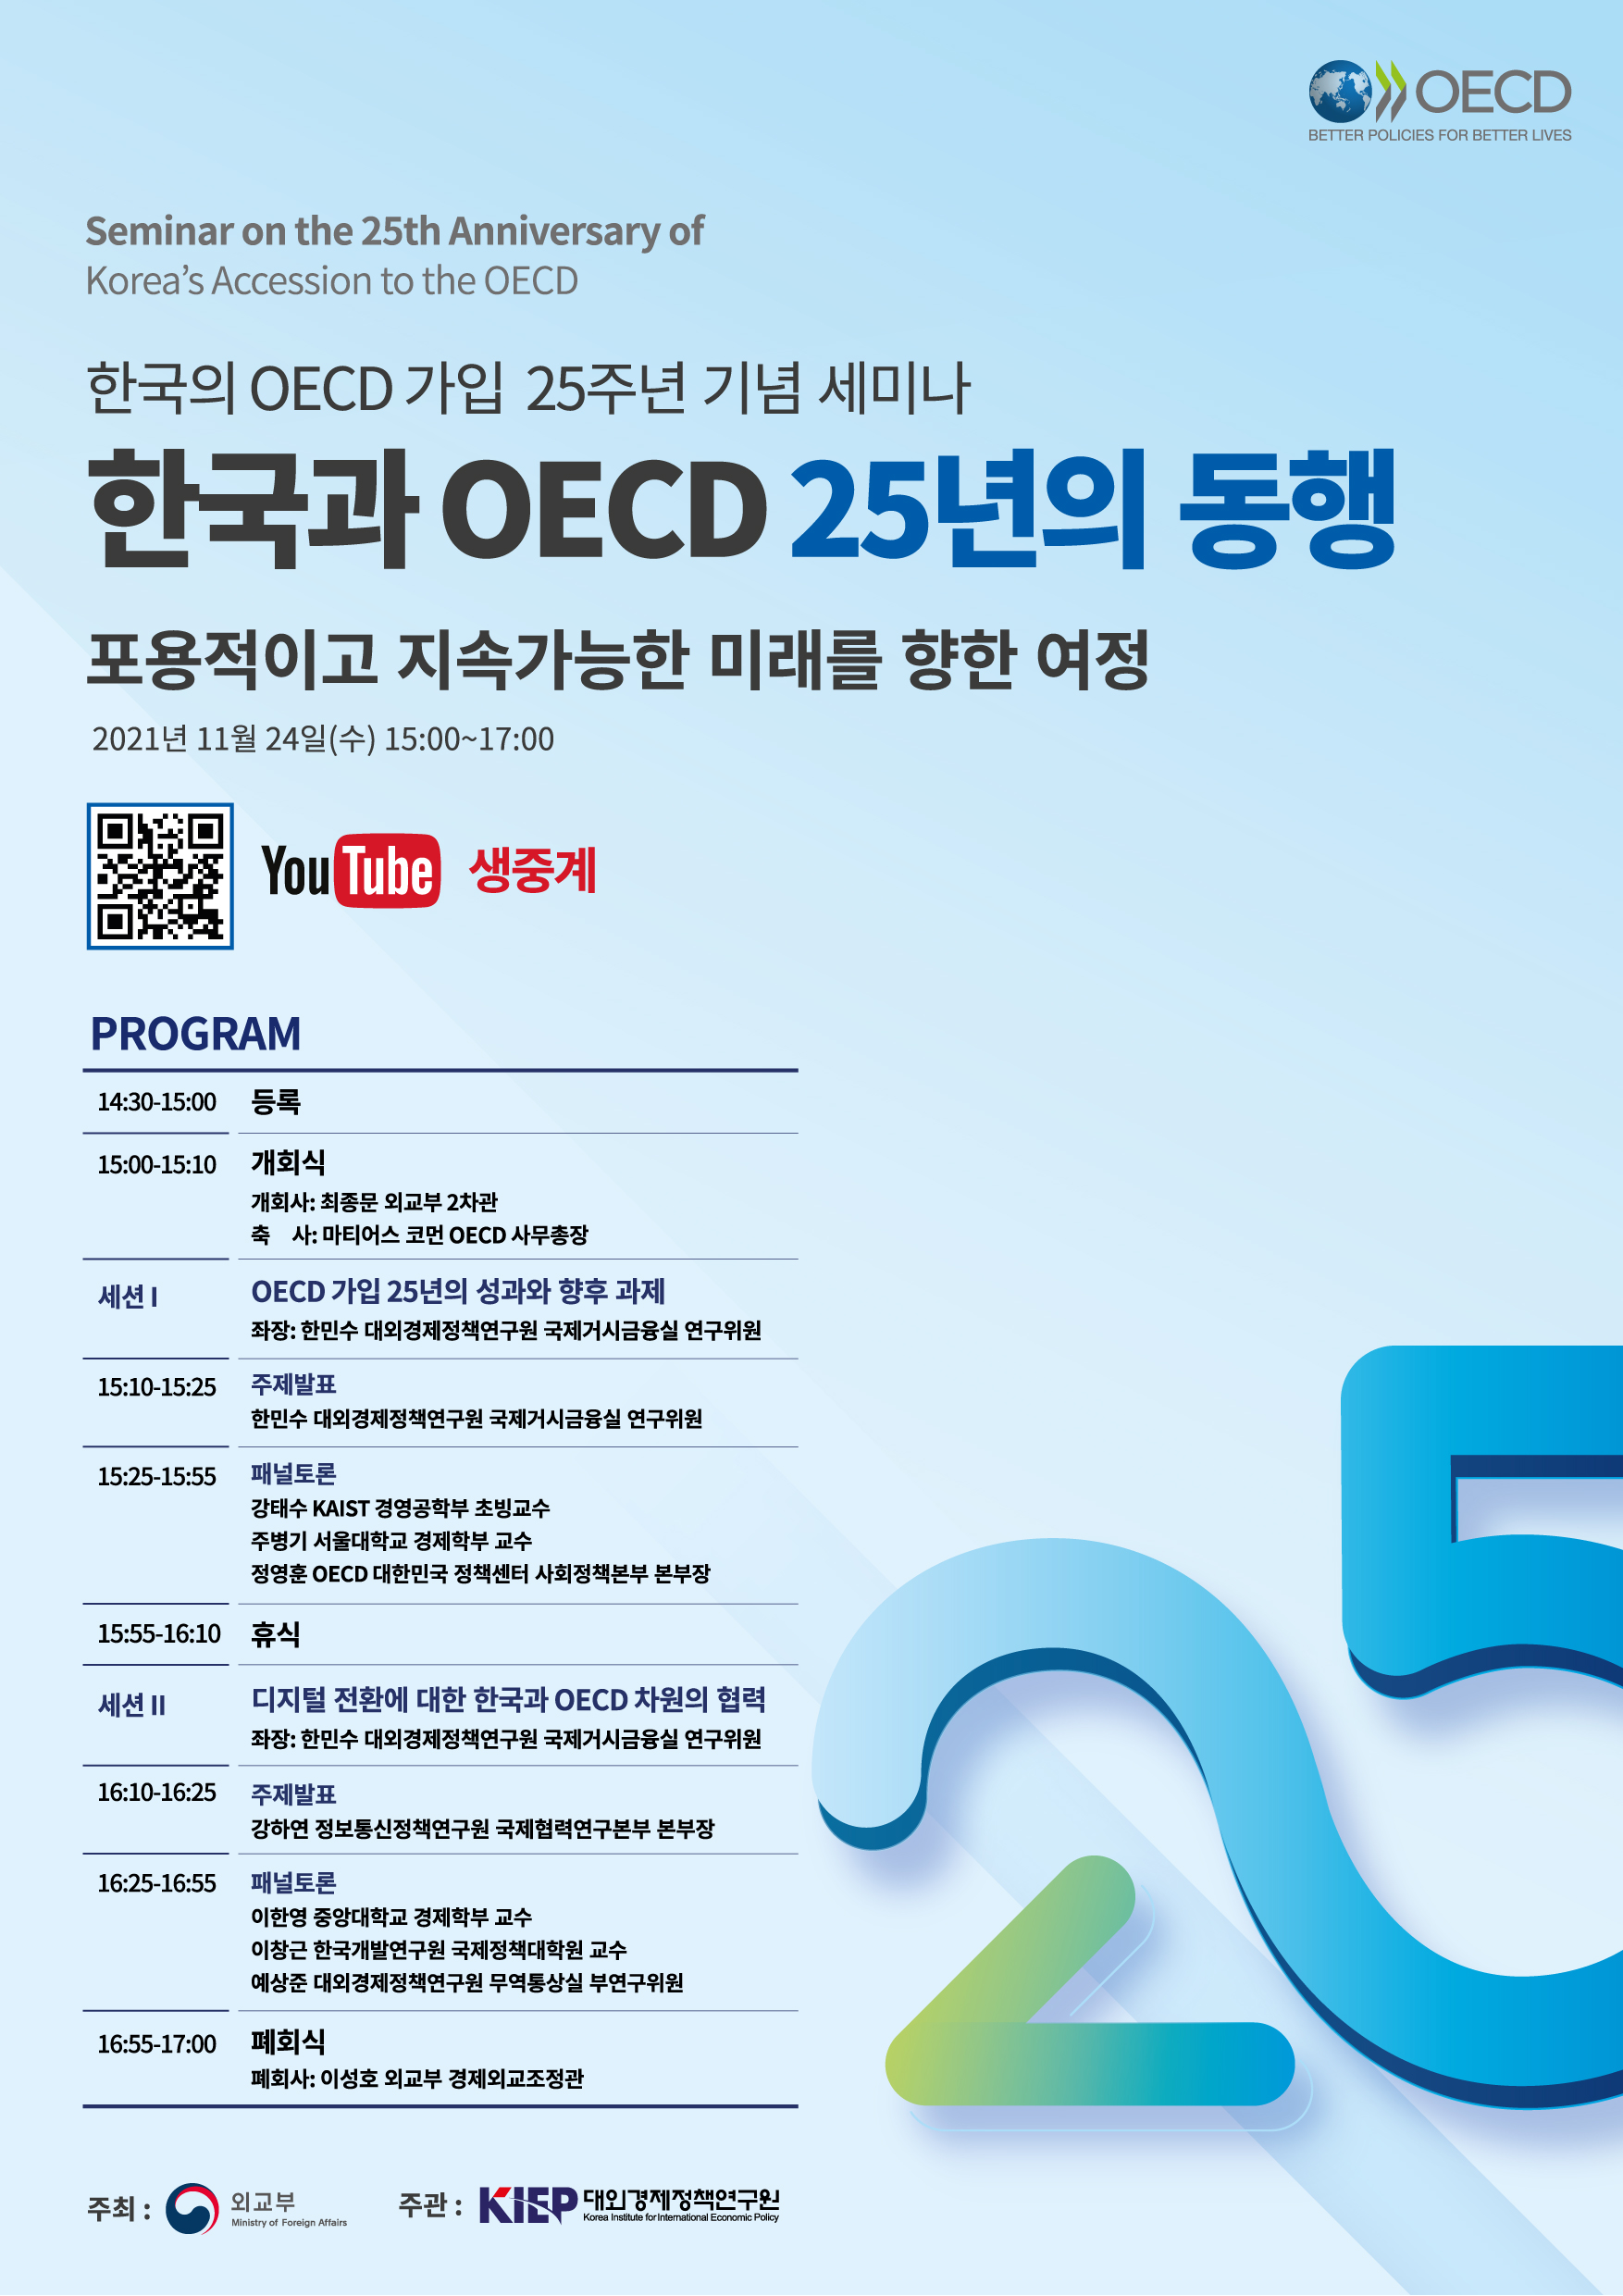 OECD BETTER POLICIES FOR BETTER LIVES
Seminar on the 25th Anniversary of Korea's Accession to the OECD
한국의 OECD 가입 25주년 기념 세미나
한국과 OECD 25년의 동행
포용적이고 지속가능한 미래를 향한 여정
2021년 11월 24일(수) 15:00~17:00
Youtube 생중계
PROGRAM
14:30~15:00 등록
15:00~15:10 개회식 개회사:최종문 외교부 2차관 축사:마티어스 코먼OECD사무총장
세션1 OECD가입 25년의 성과와 향후 과제 좌장: 한민수 대외경제정책연구원 국제거시금융실 연구위원
15:10~15:25 주제발표 민수 대외경제정책연구원 국제거시금융실 연구위원
15:25~15:55 패널토론 강태수 KAIST 경영공학부 초빙교수 주병기 서울대학교 경제학부 교수 정영훈 OECD 대한민국 정책센터 사회정책본수 본부장
15:55~16:10 휴식
세션2 디지털 전환에 대한 한국과 OECD차원의 협력
좌장:한민수 대외경제정책연구원 국제거시금융실 연구위원
16:10~16:25 주제발표 강하연 대외경제정책연구원 국제협력연구본부 본부장
16:25~16:55 패널토론 이한영 중앙대학교 경제학부 교수 이창근 한국개발연구원 국제정책대학원 교수 예상준 대외경제정책연구원 무역통상실 부연구위원
16:55~17:00 폐회식 폐회사:이성호 외교부 경제외교조정관
주최:외교부 주관:대외경제정책연구원